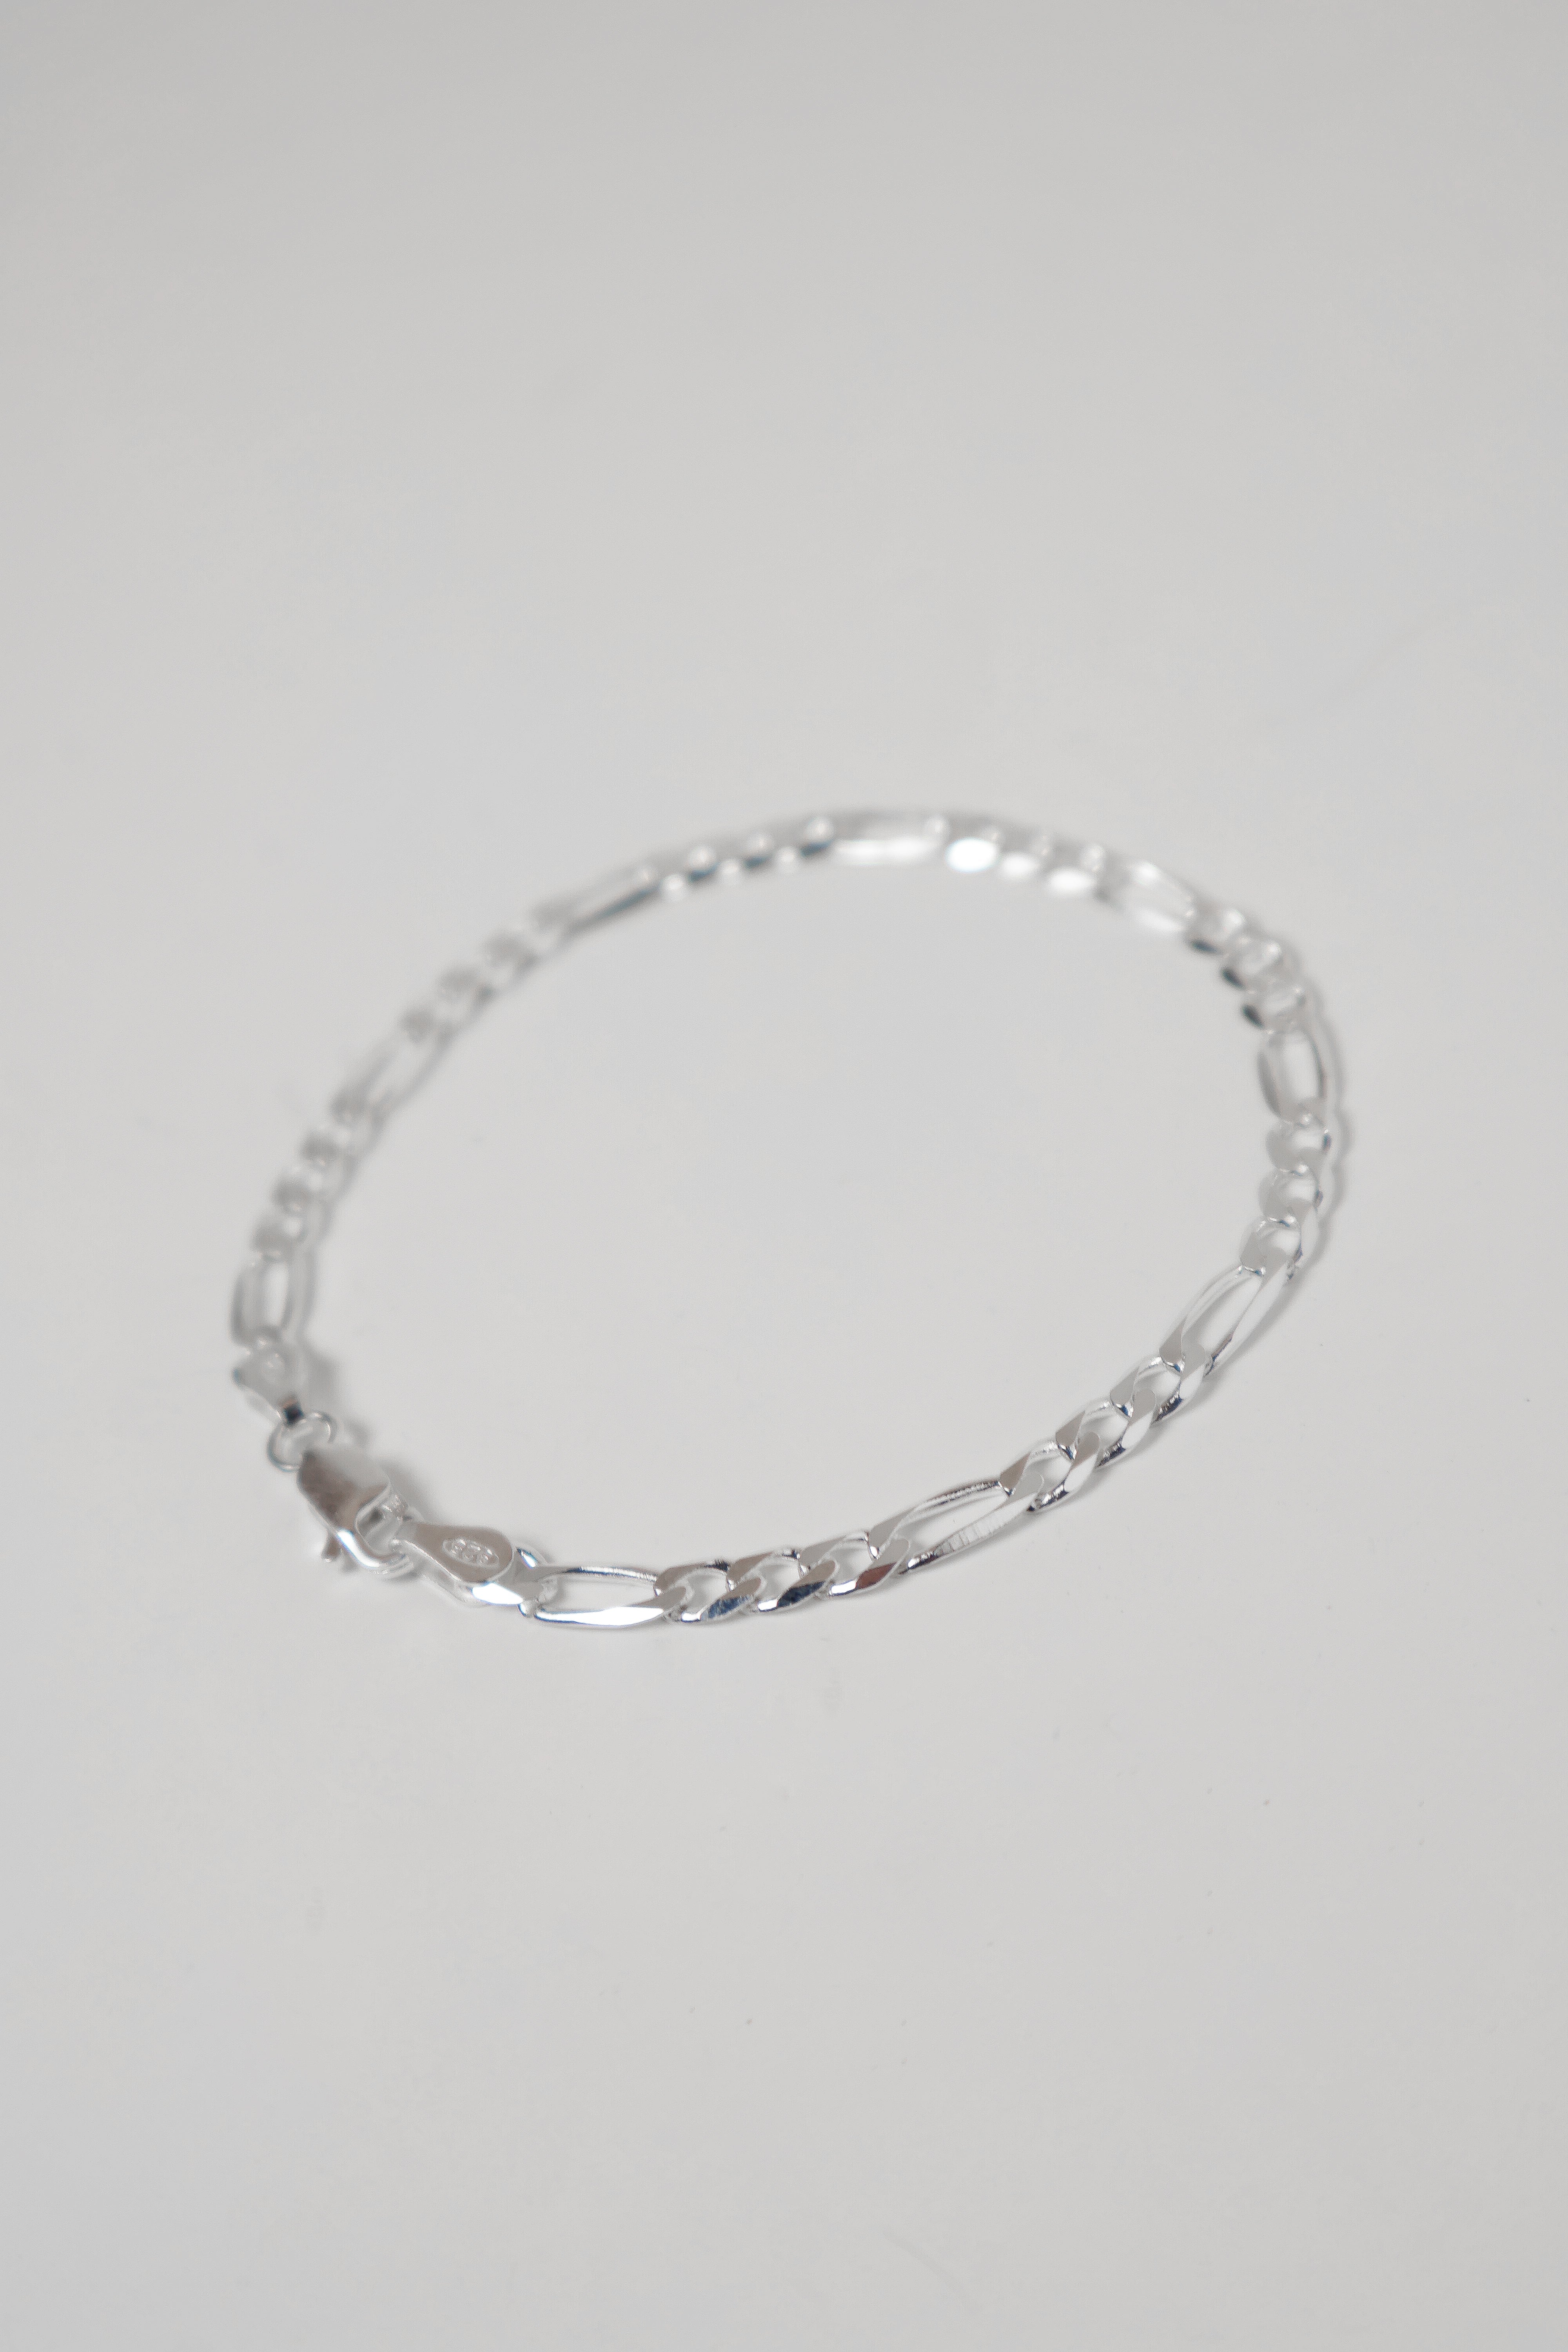 Figaro Bracelet | $149